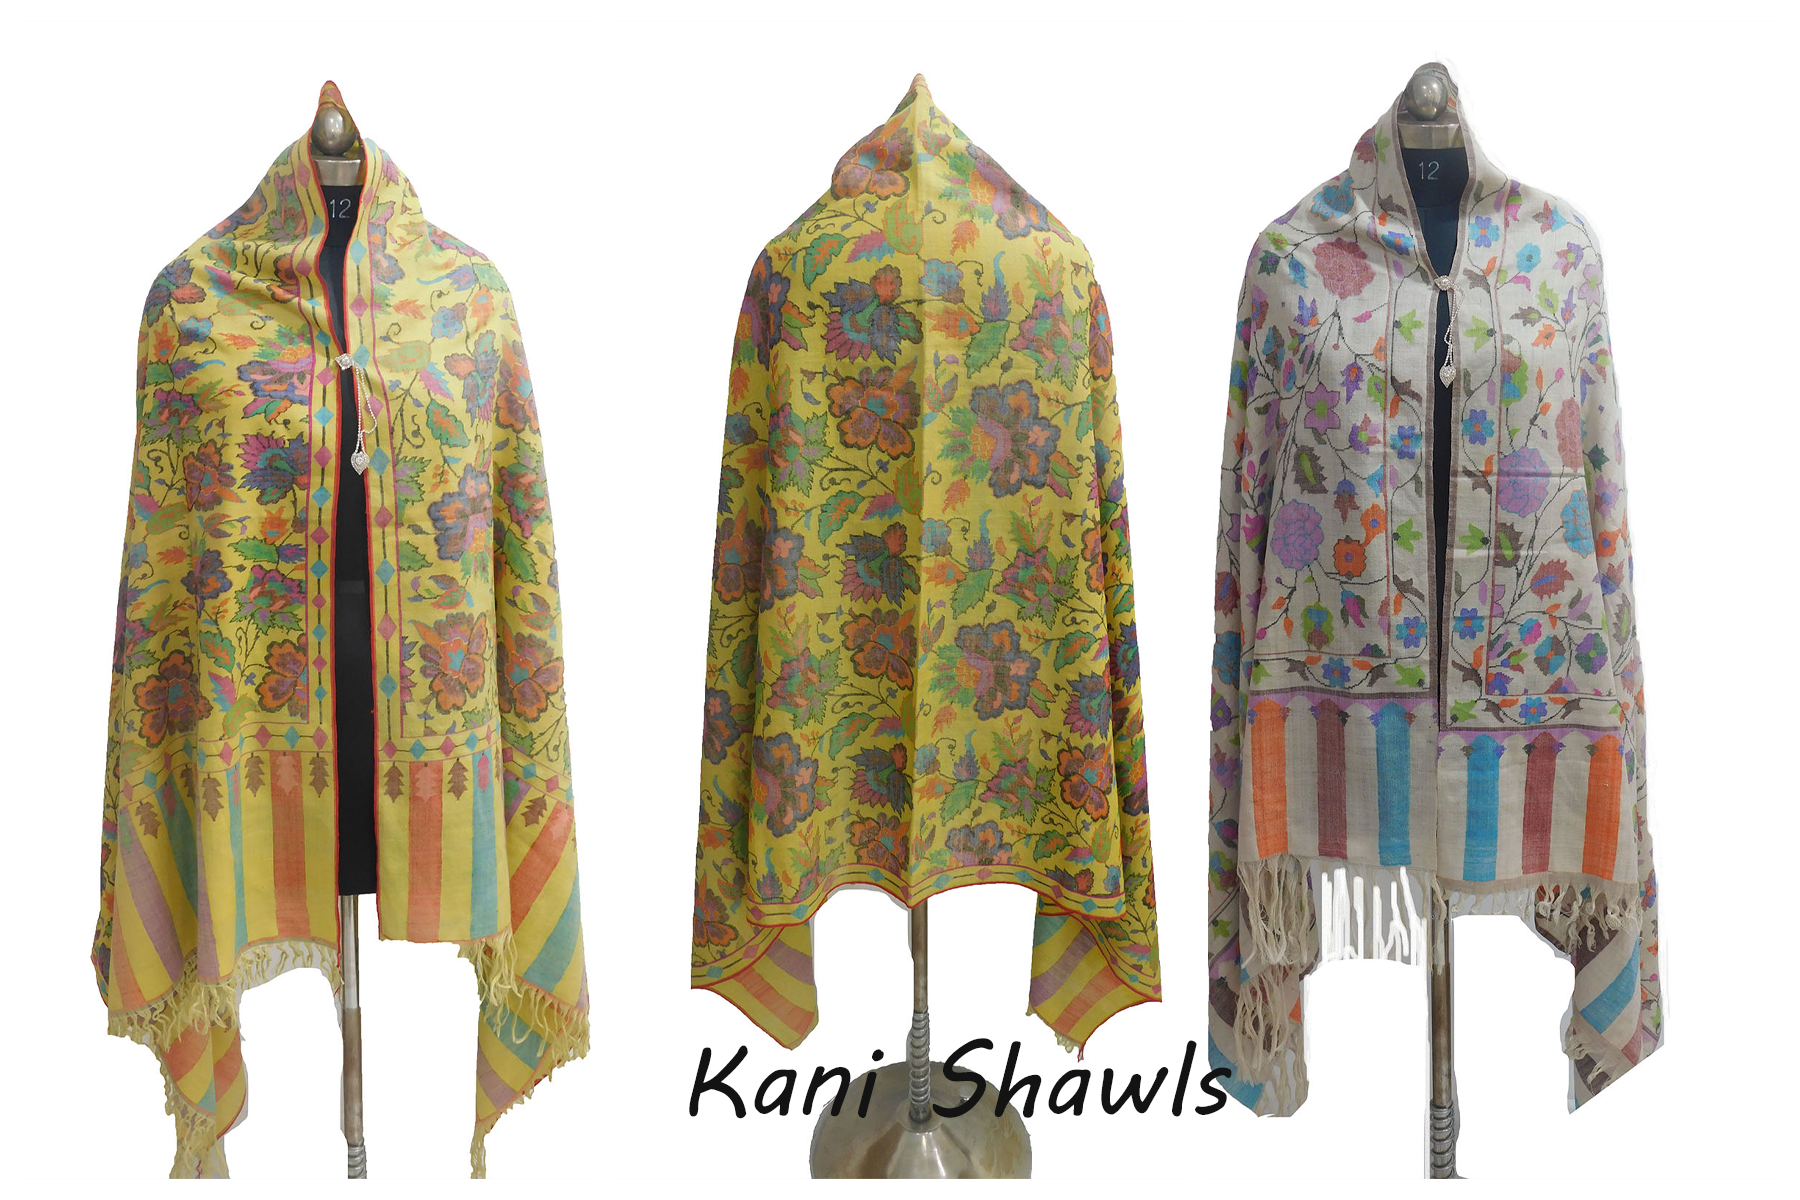 Kani shawls